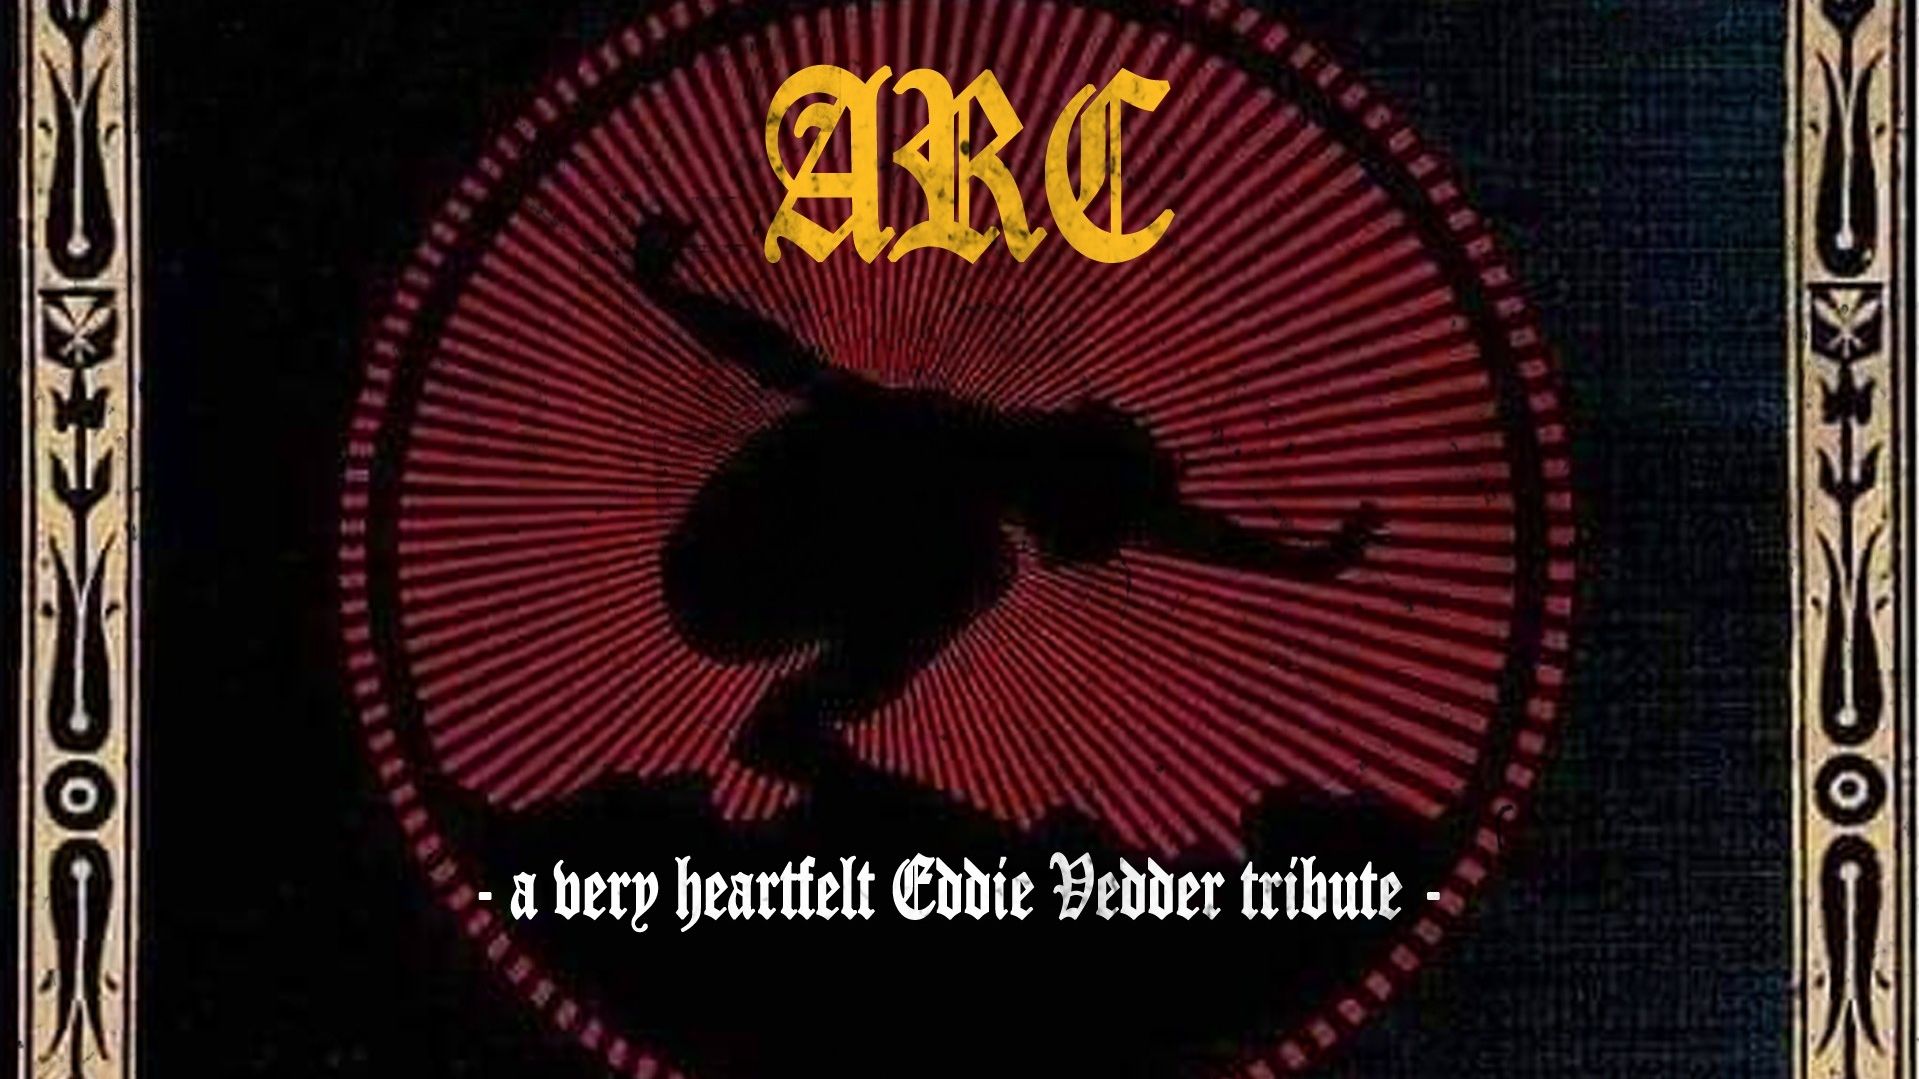 ARC - Eddie Vedder tribute